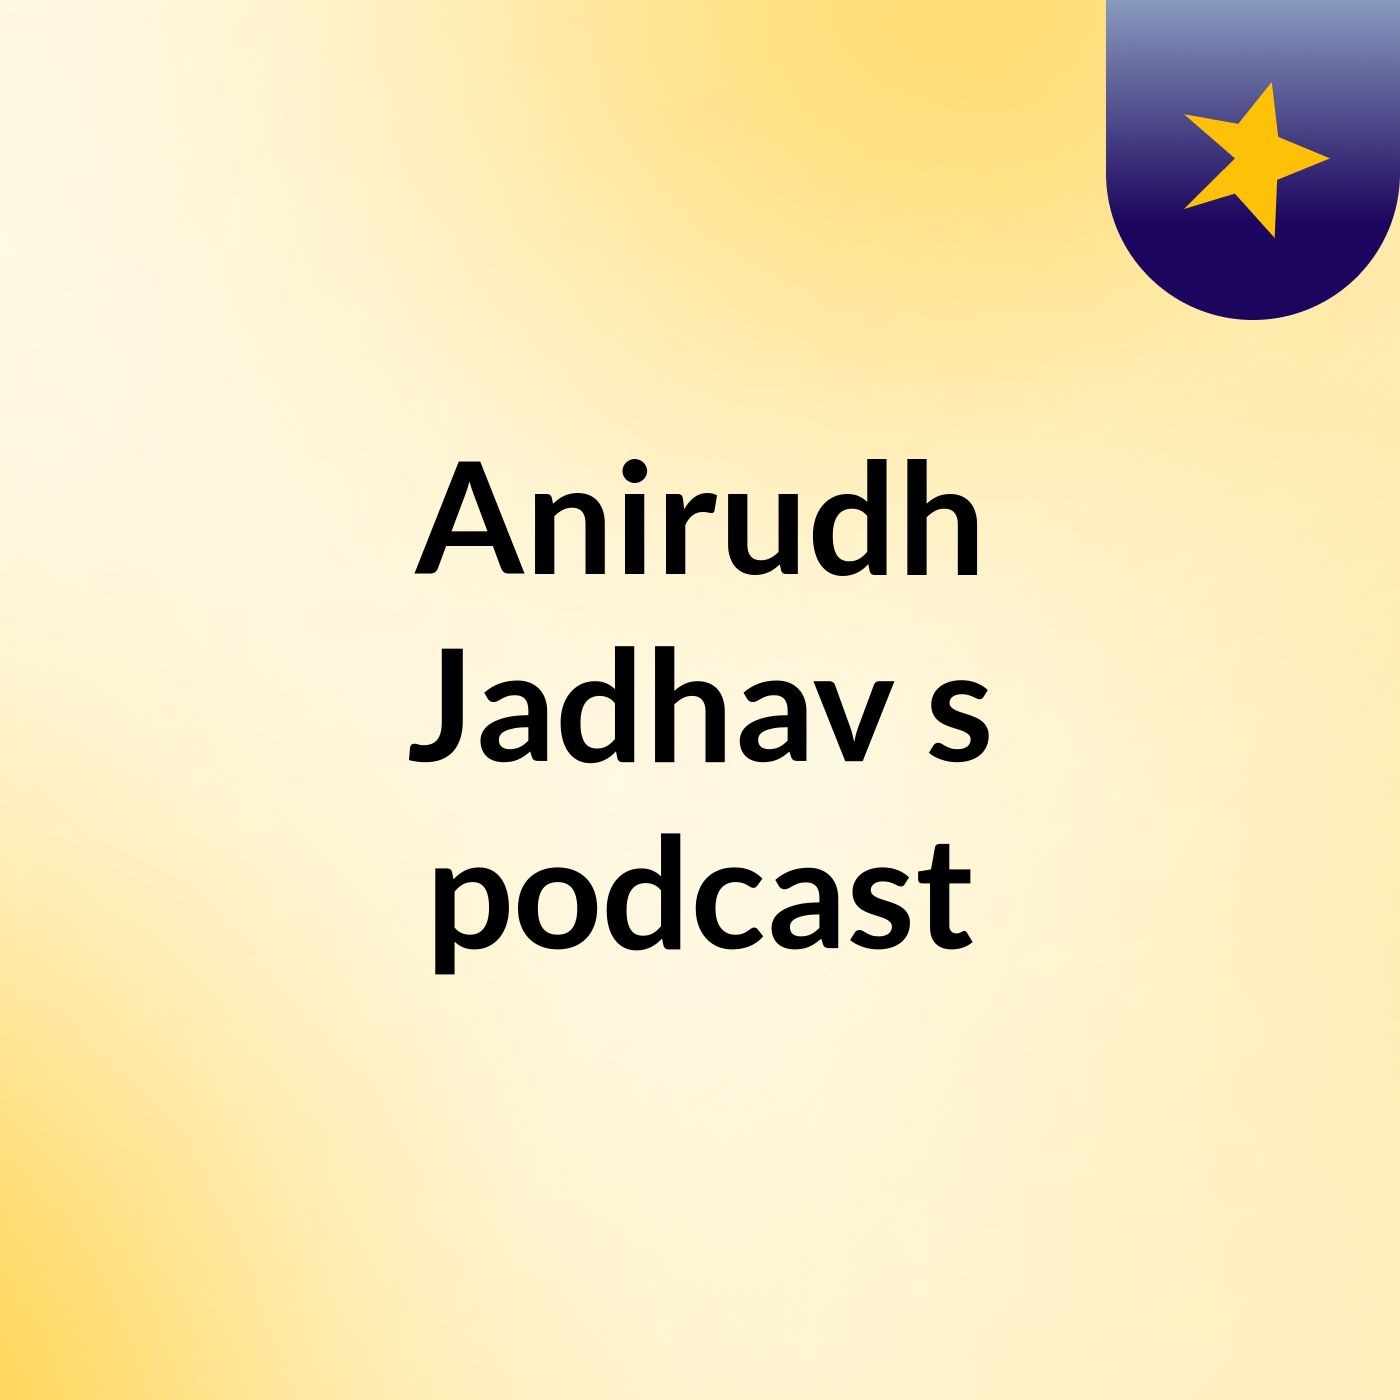 Anirudh Jadhav's podcast